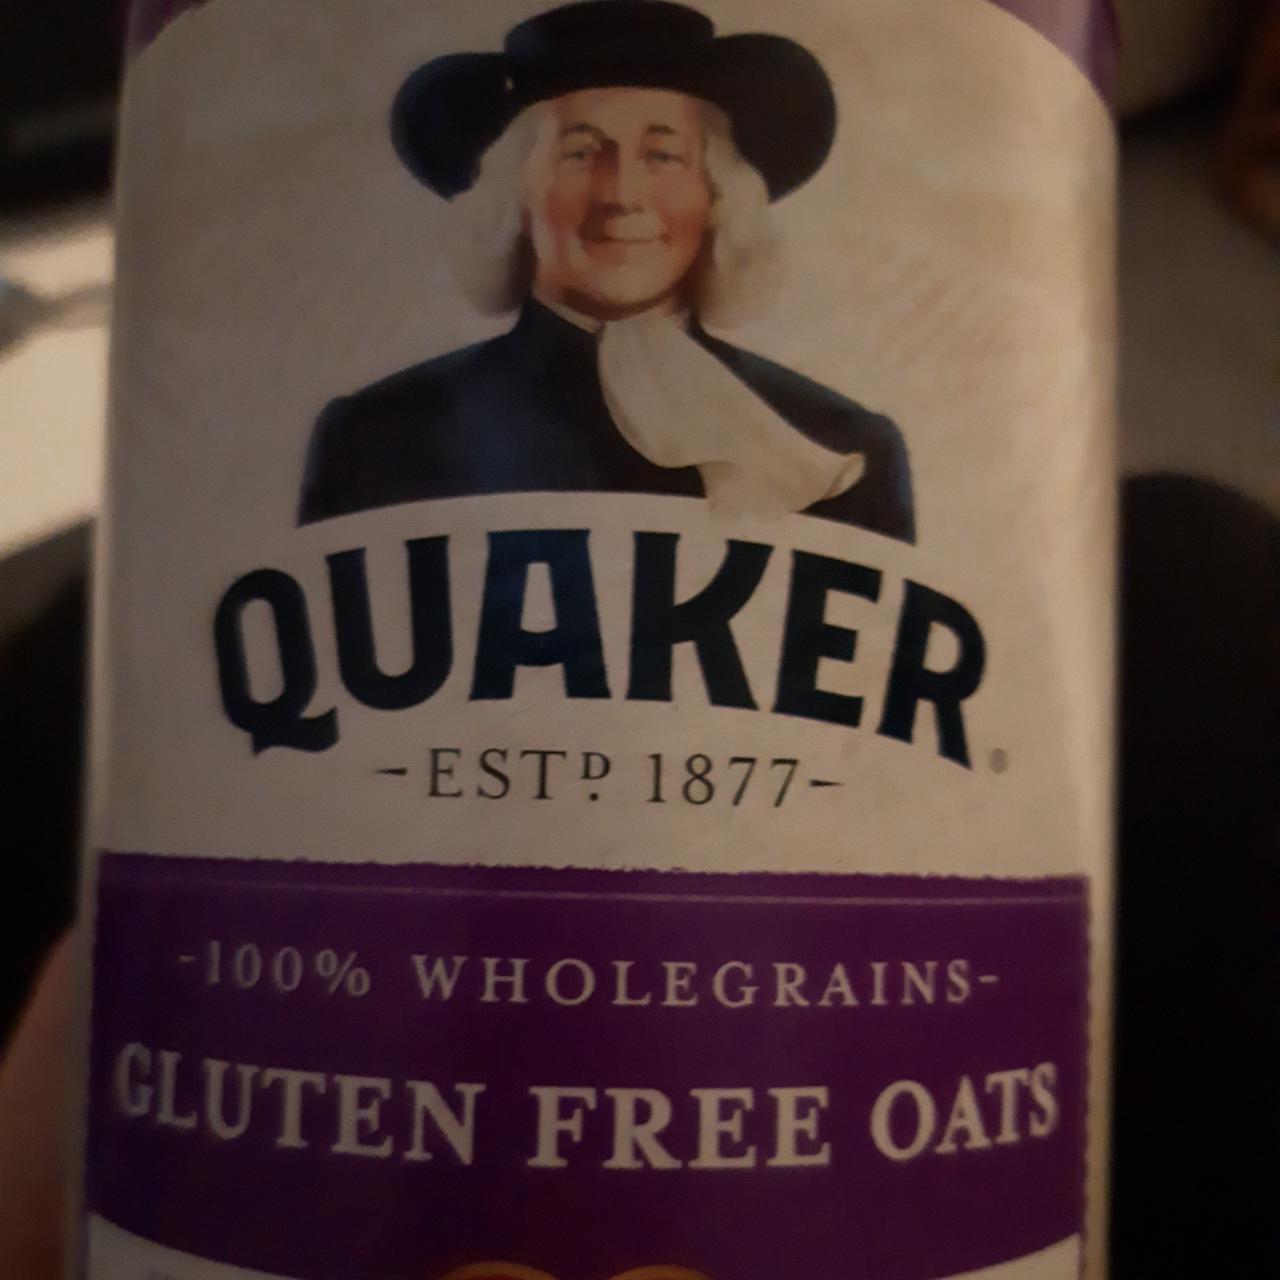 Fotografie - Gluten free oats Quaker